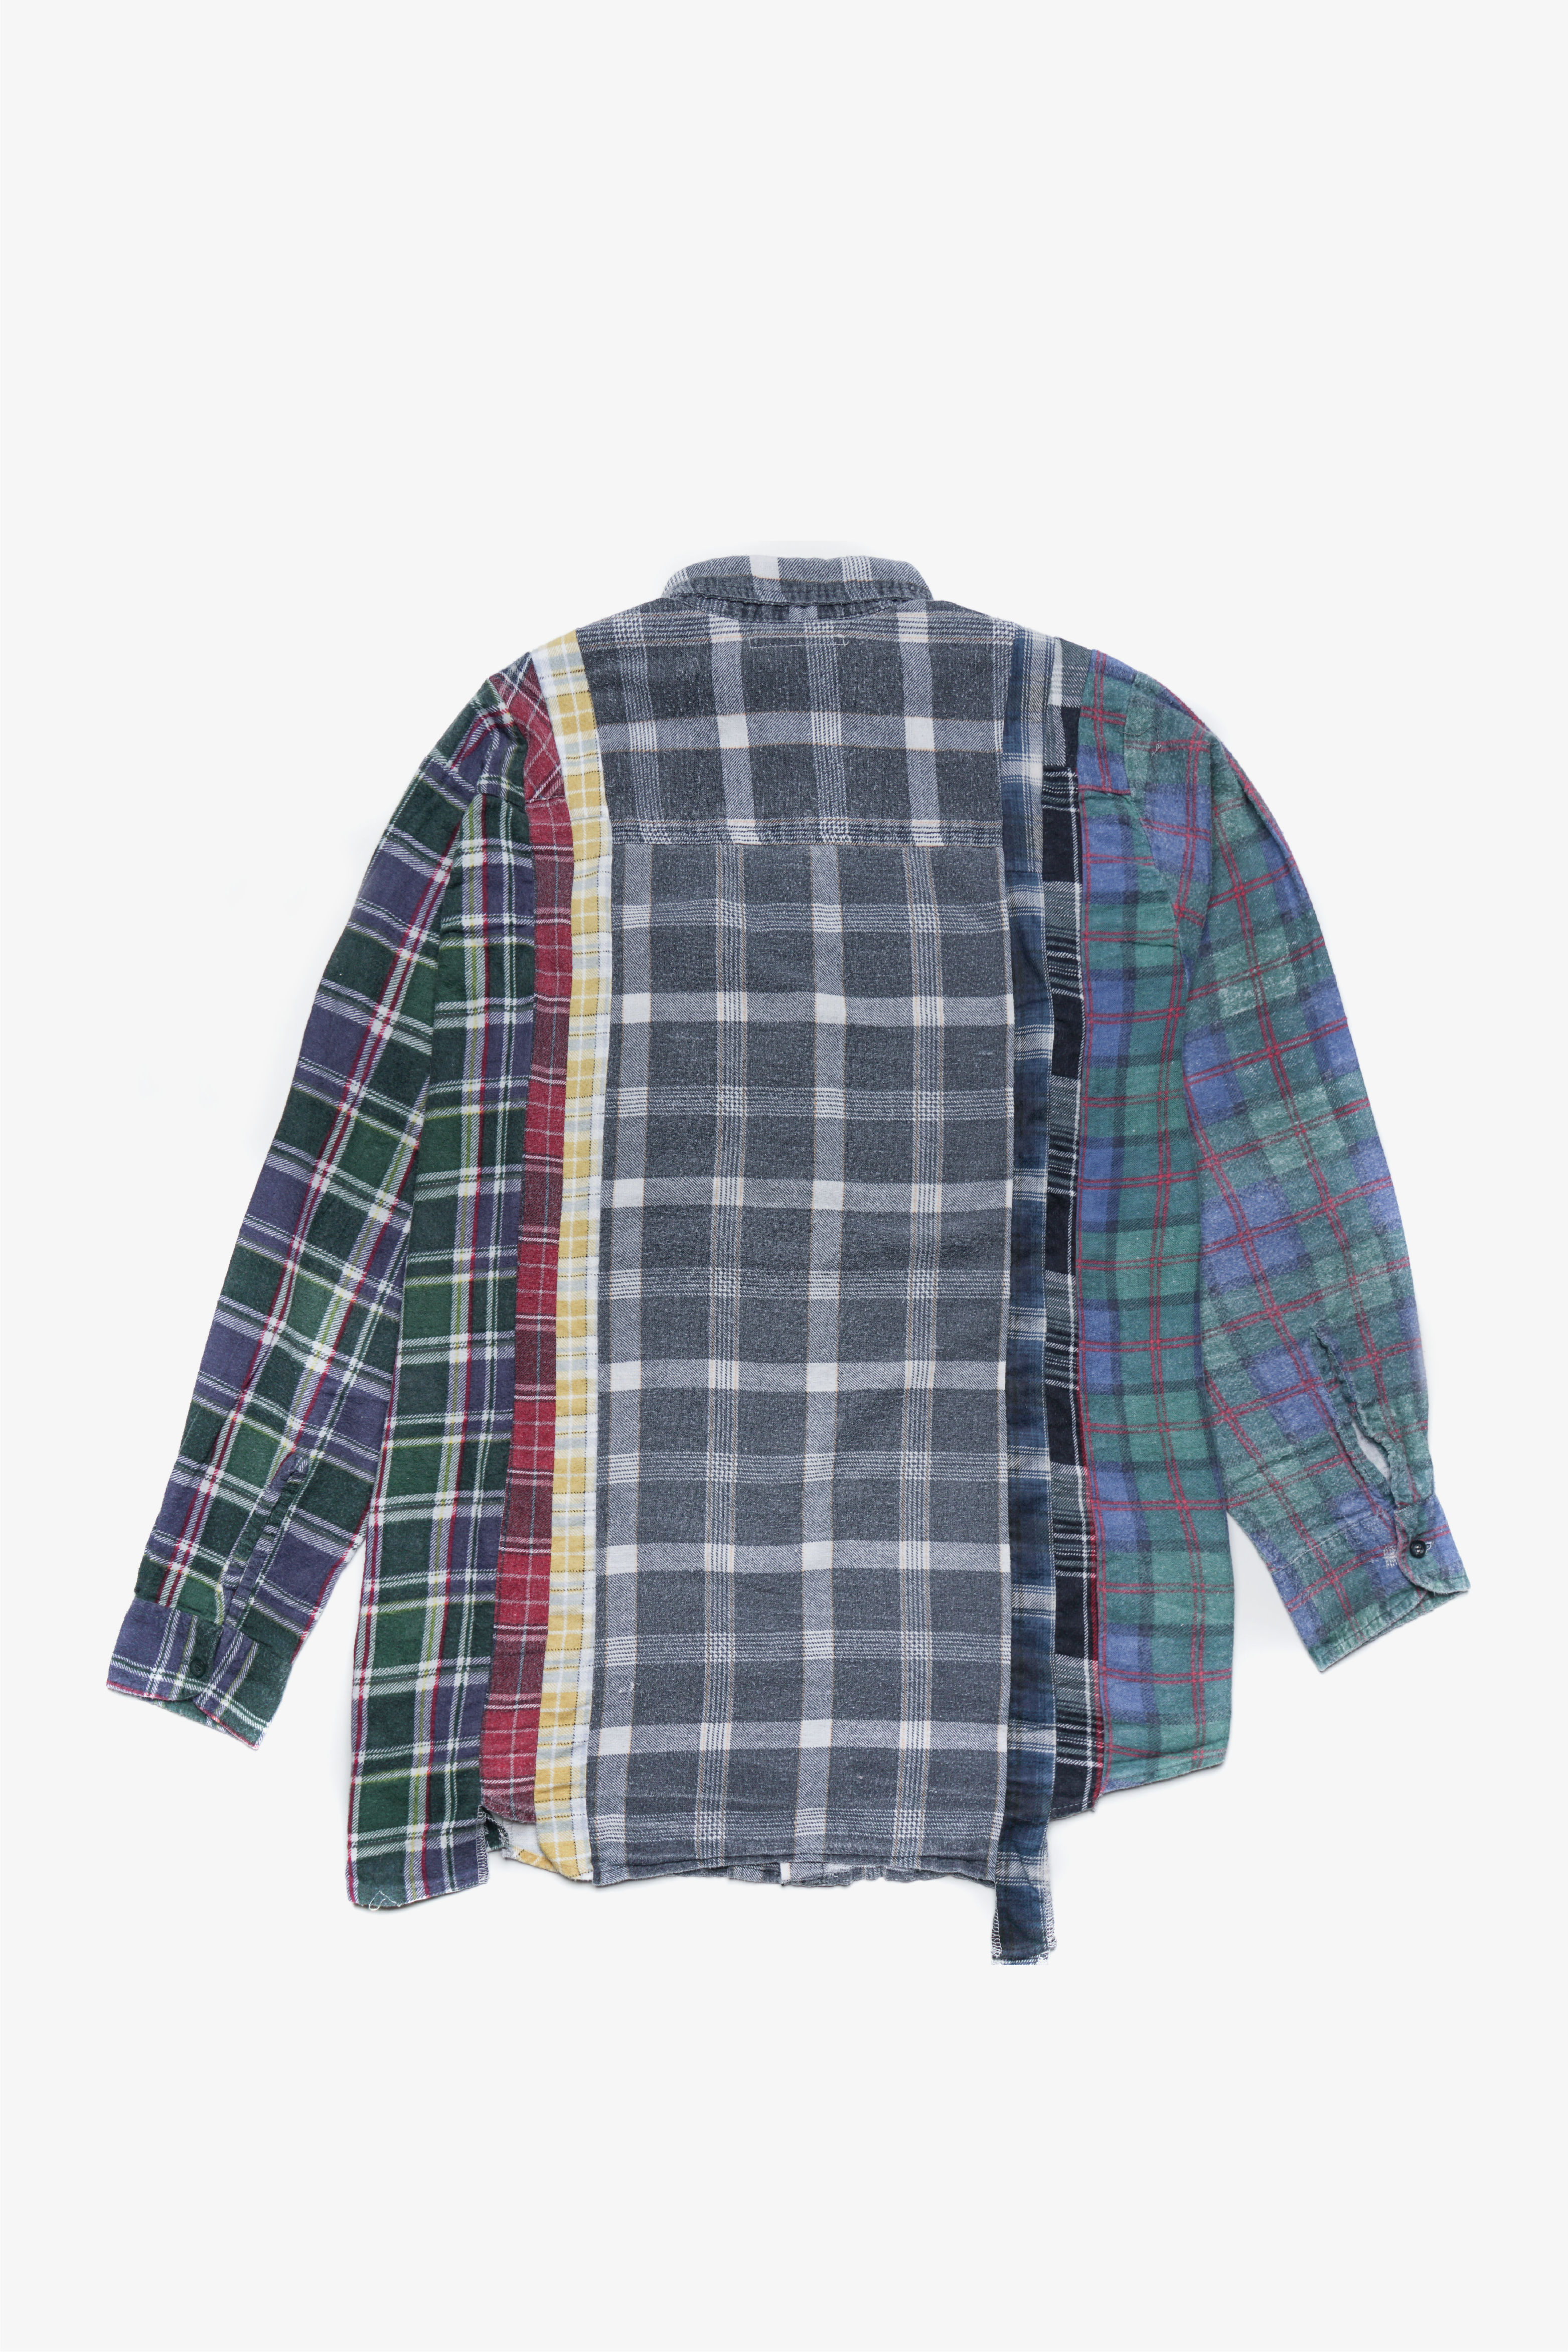 Selectshop FRAME - NEEDLES 7 Cuts Flannel Shirt - XL(B) Shirts Dubai